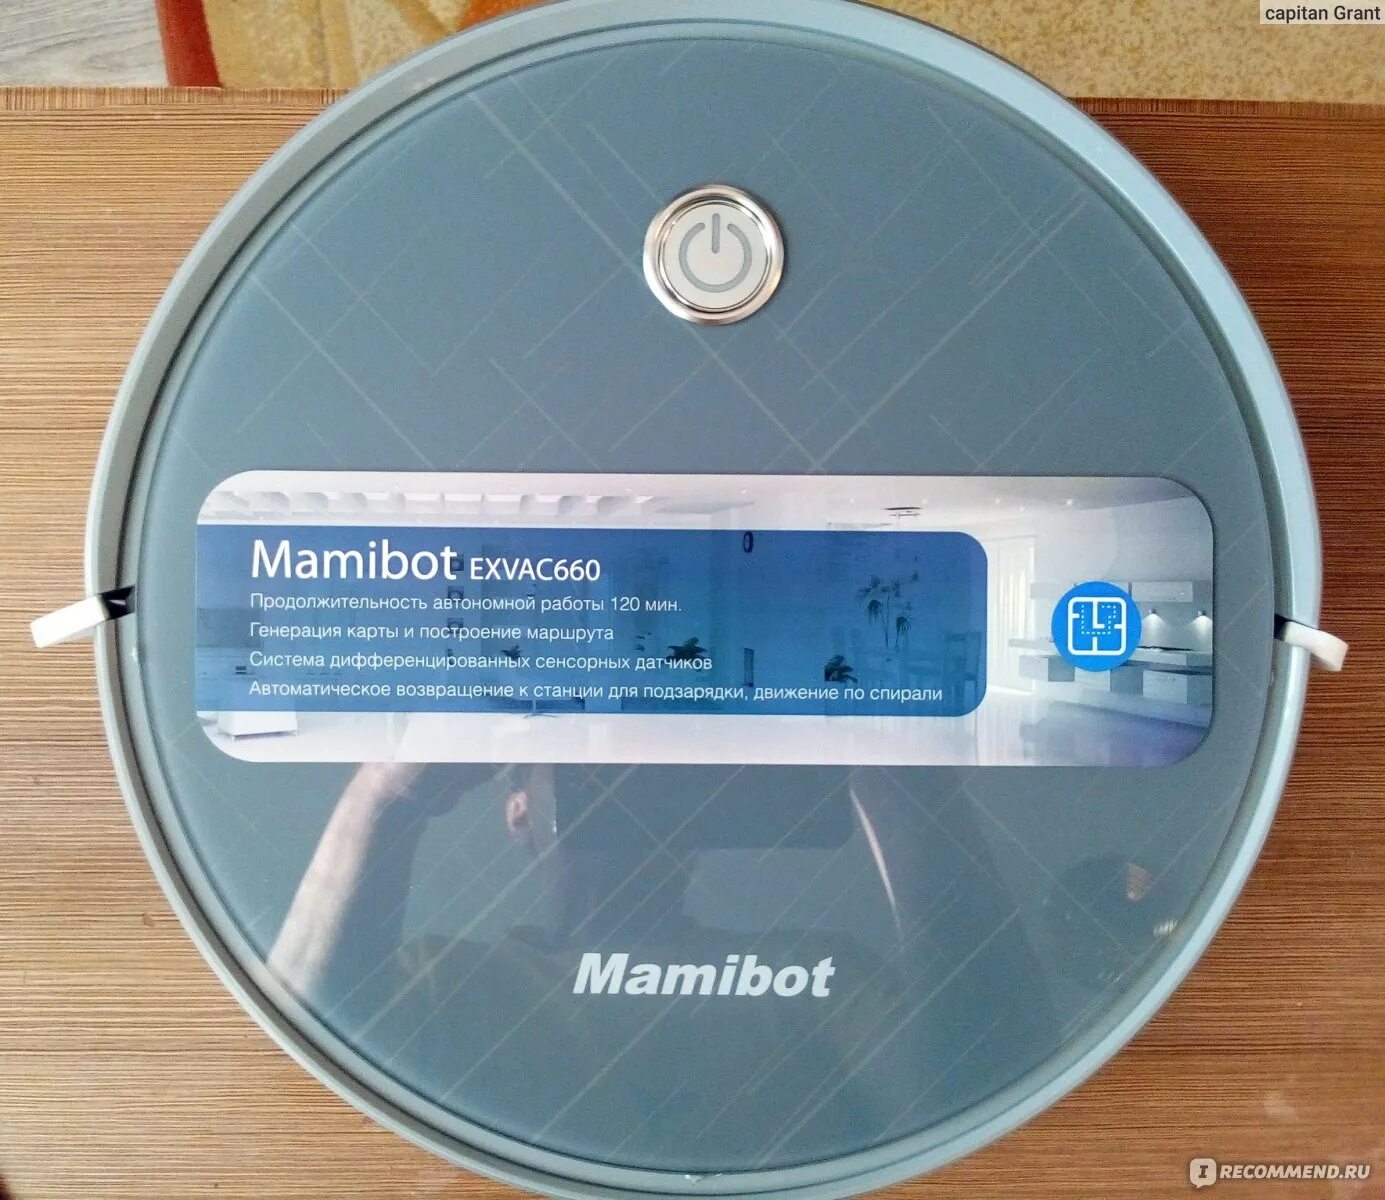 Mamibot exvac700. Mamibot exvac660. Пылесос Mamibot exvac660. МАМИБОТ робот пылесос 660. Пылесос Mamibot exvac660 инструкция.